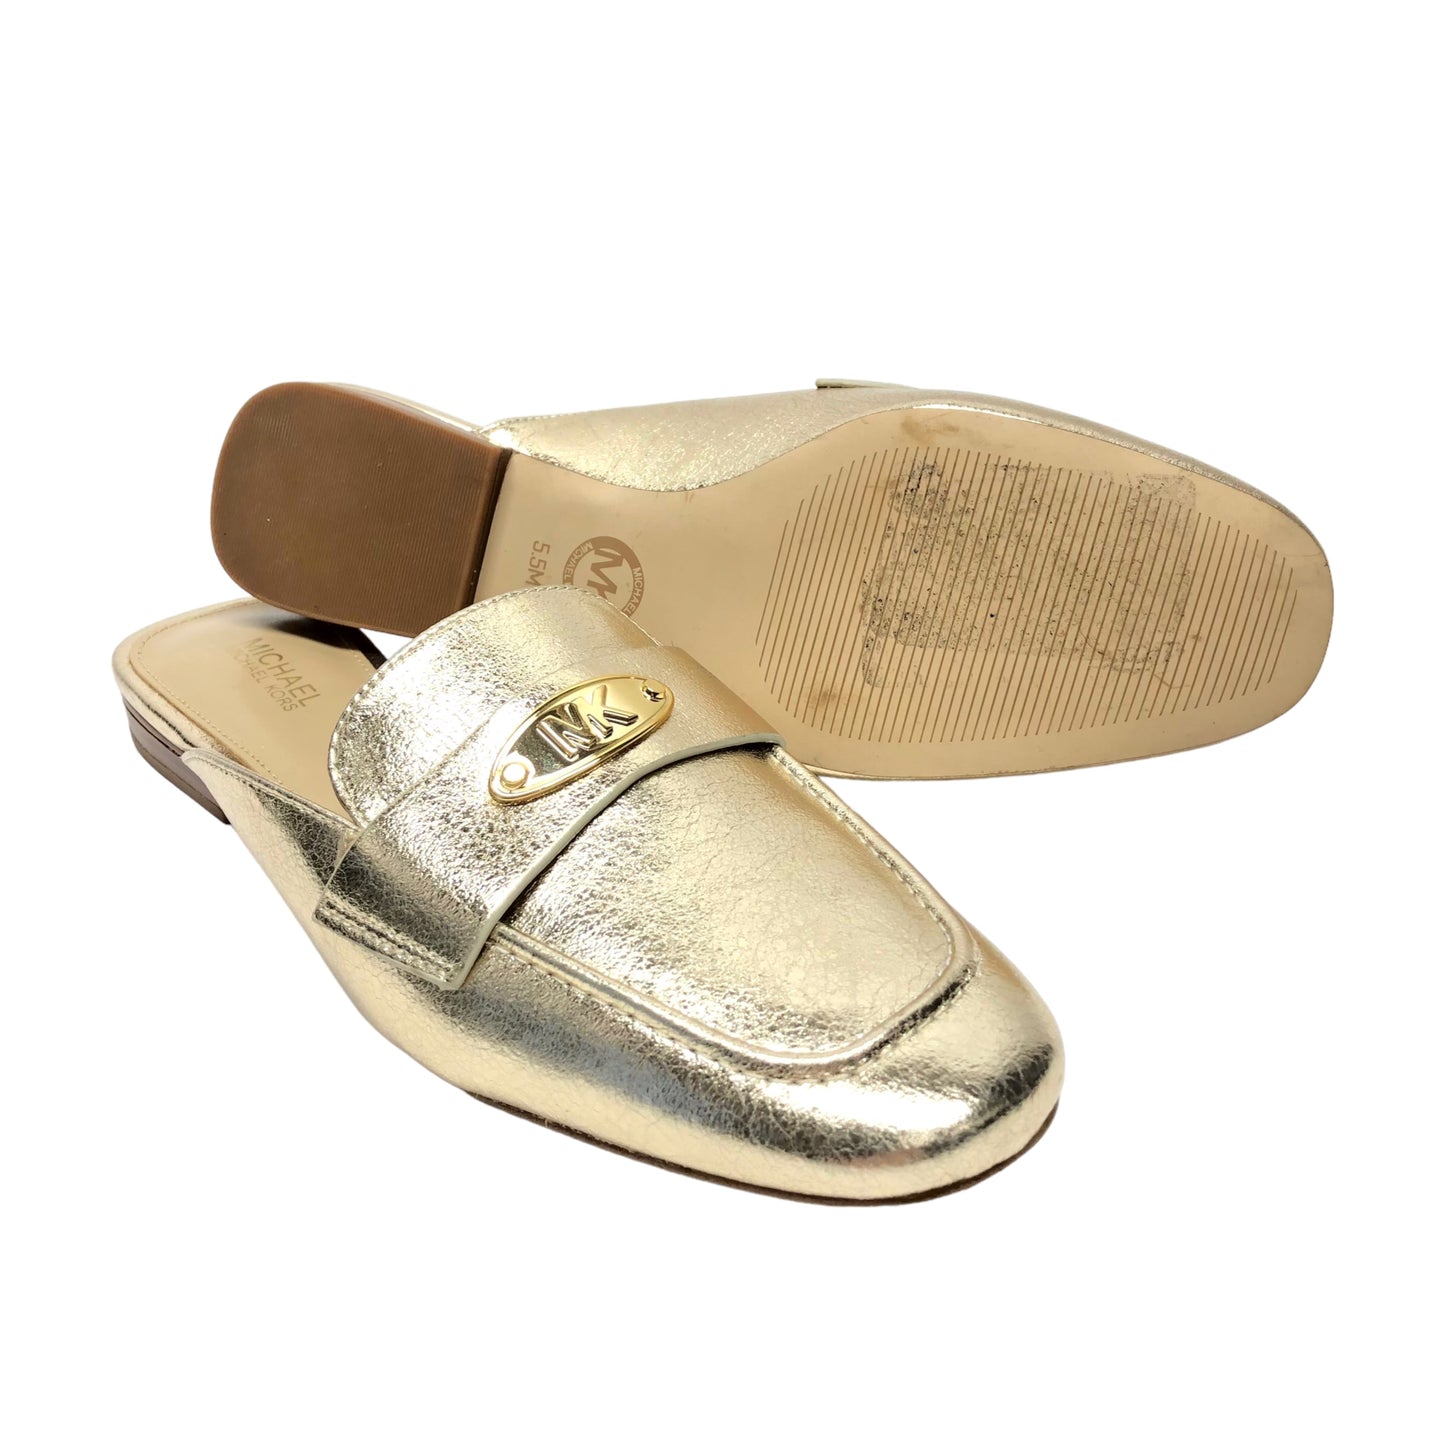 Shoes Flats Mule & Slide By Michael By Michael Kors  Size: 5.5